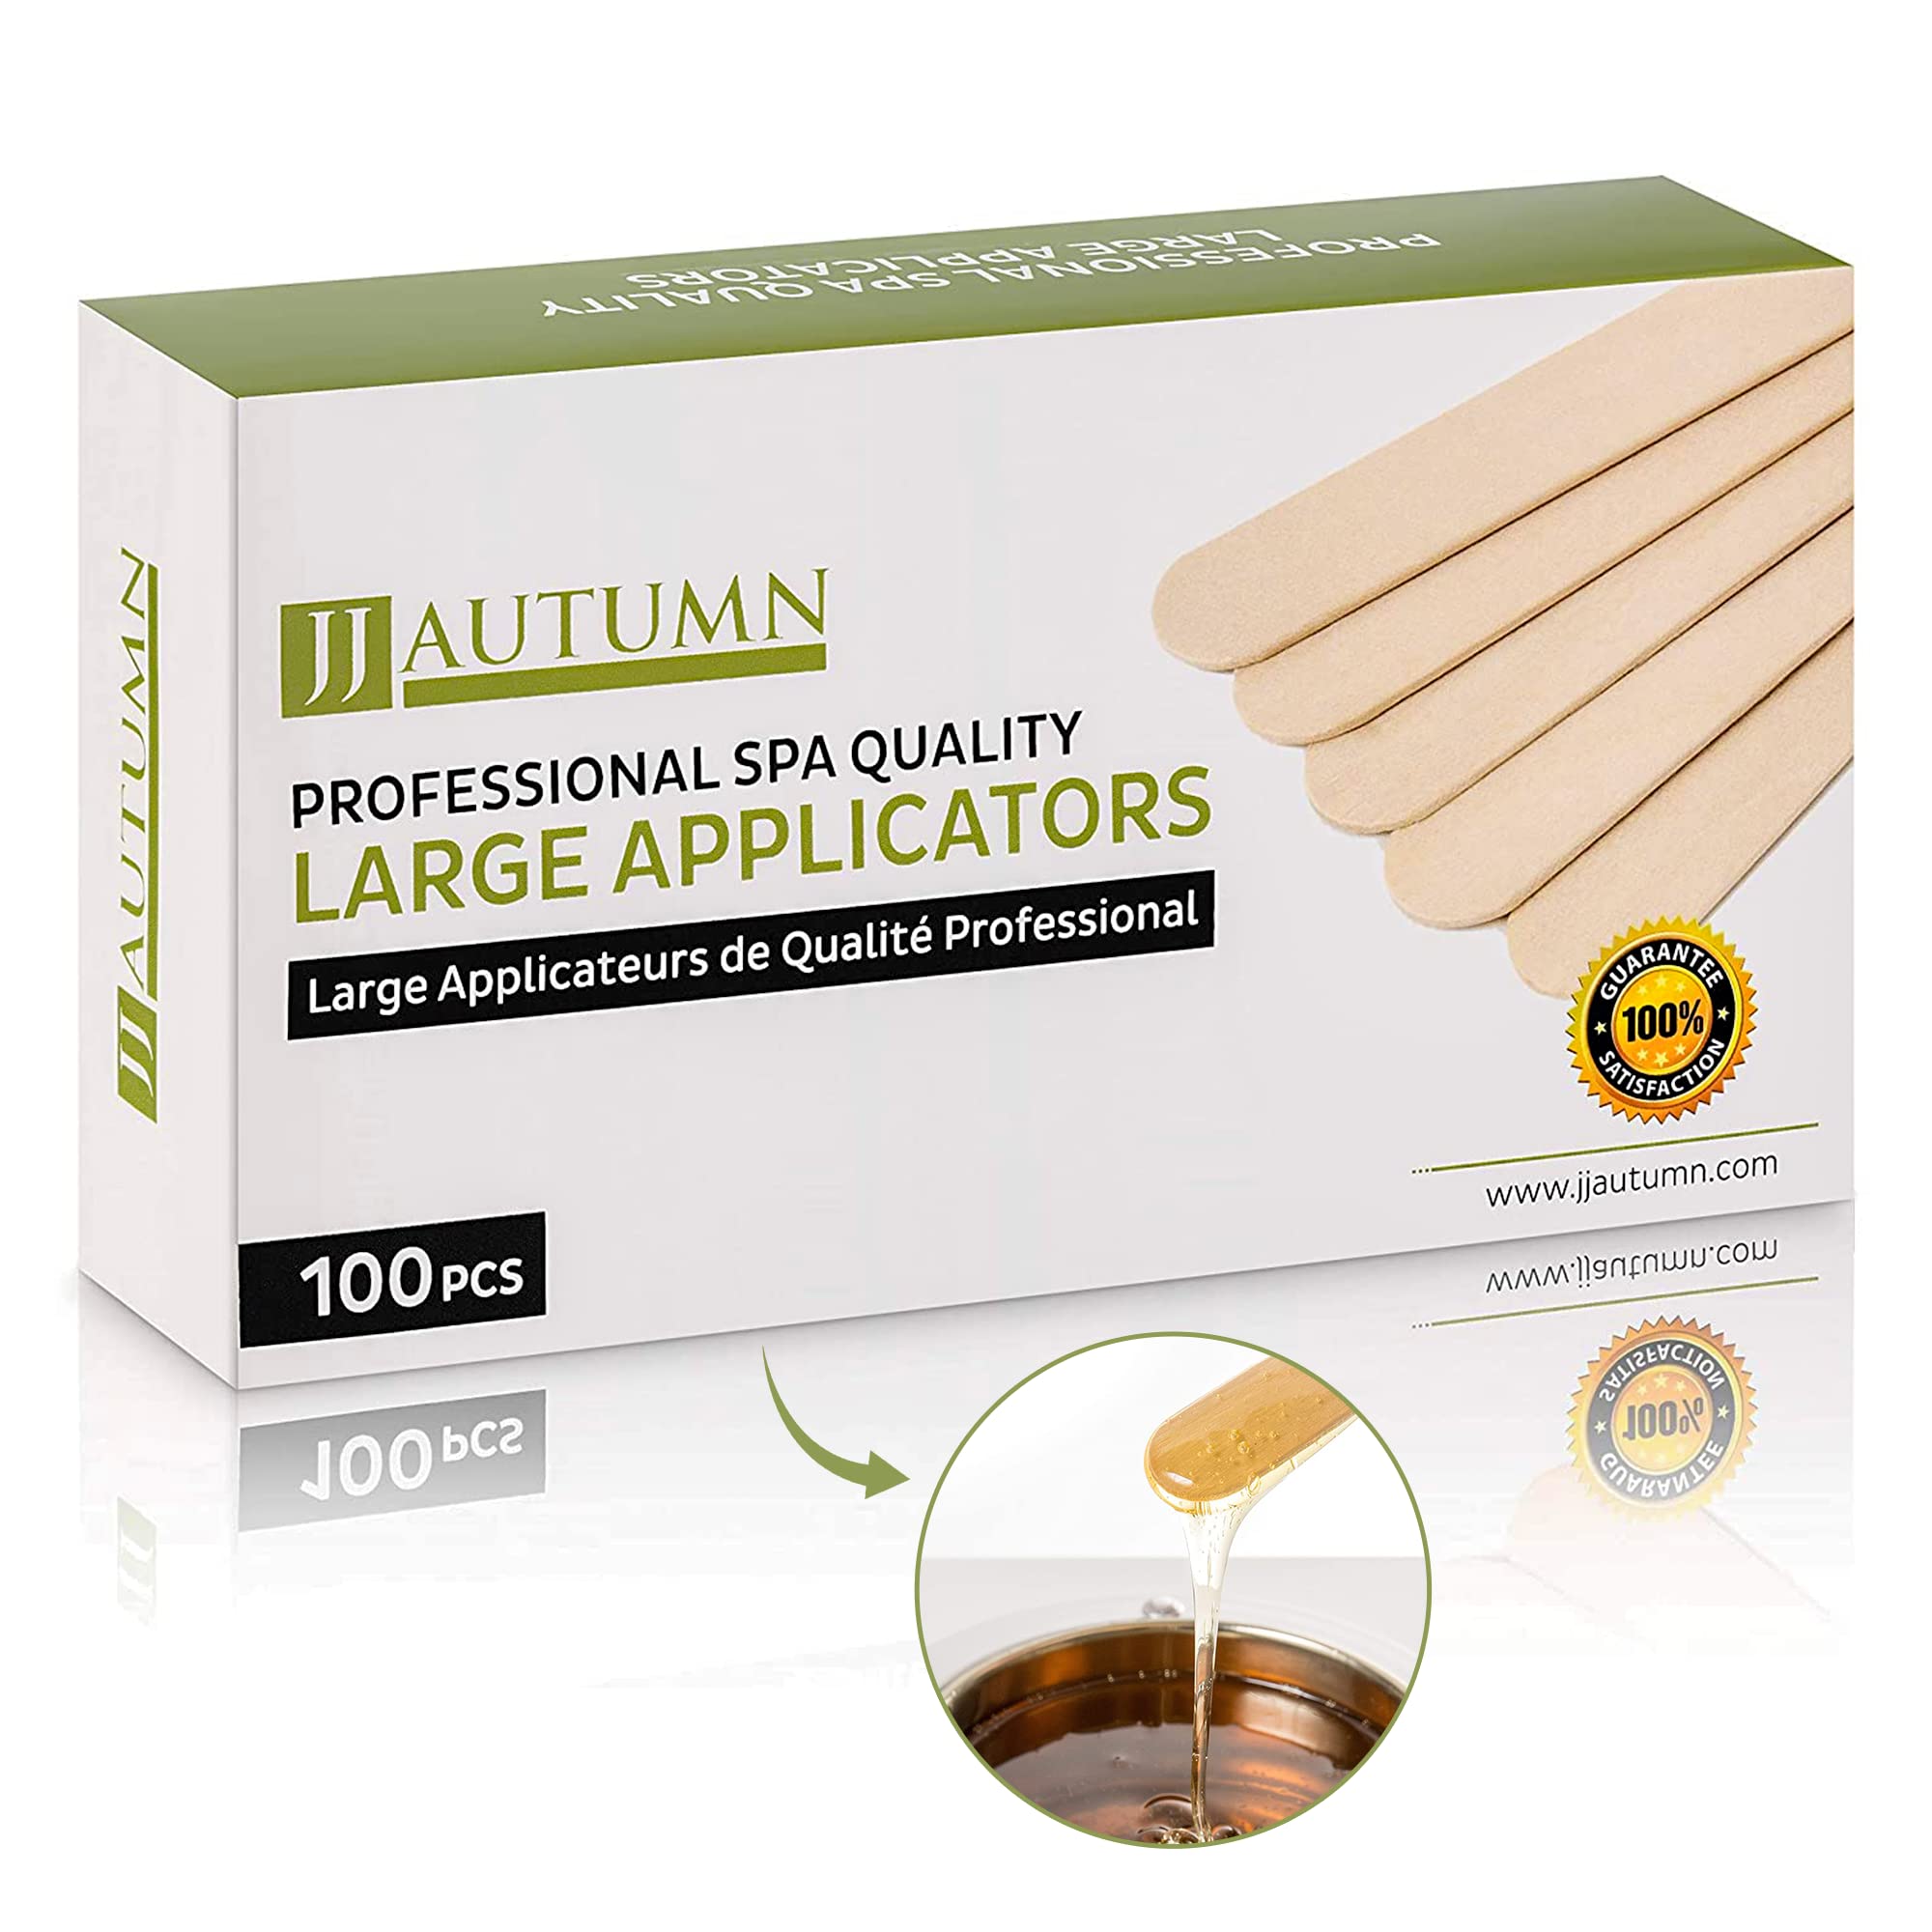 Wax Applicator Sticks Wood Wax Spatulas for Hair Removal 6(Pack